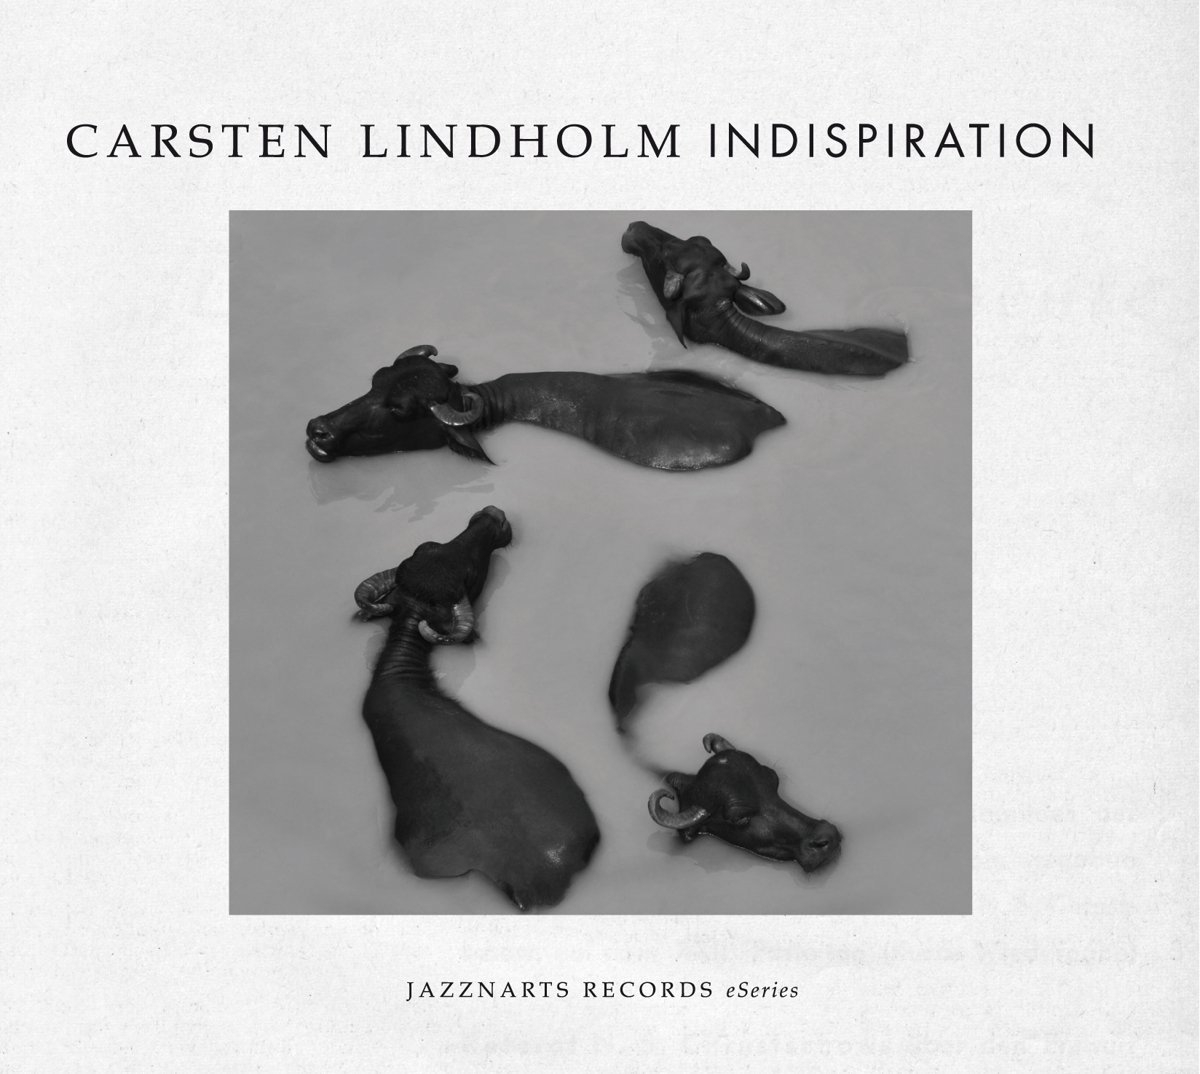 jazz 10 17 Carsten lindholm